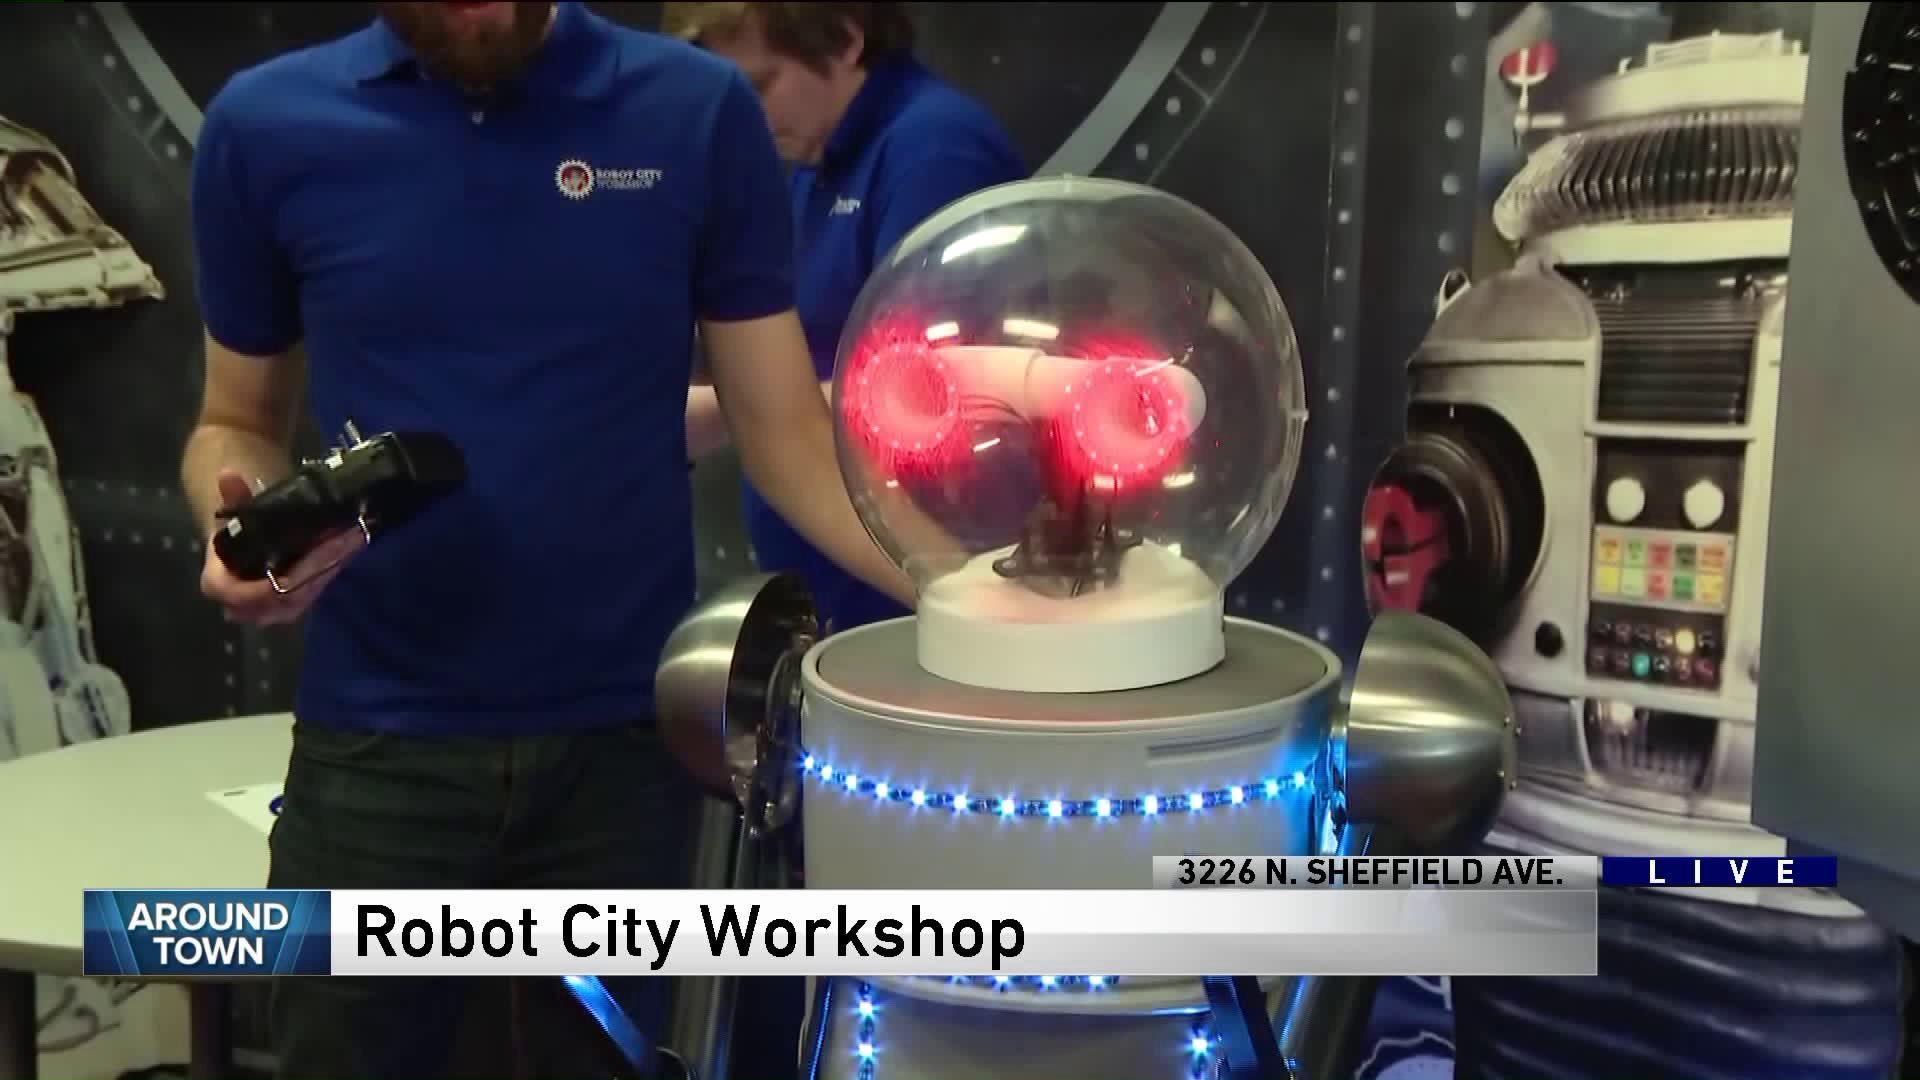 Around Town builds robots at Robot City Workshop